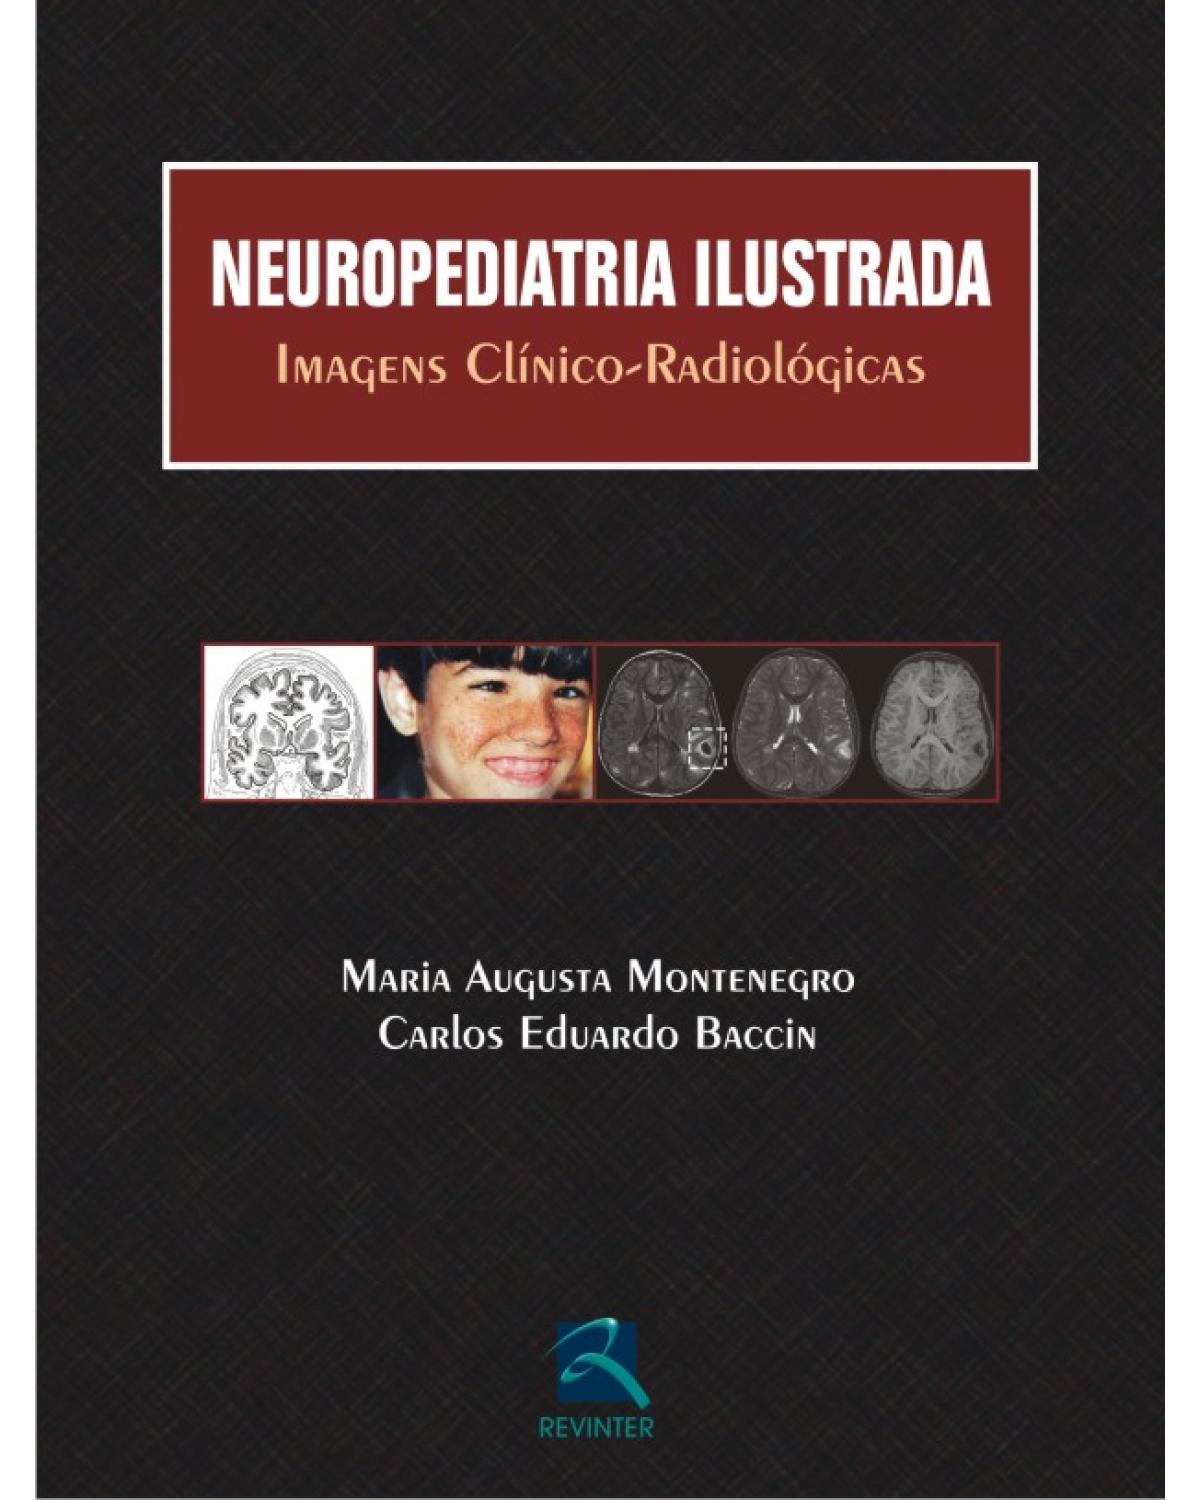 Neuropediatria ilustrada - imagens clínico-radiológicas - 1ª Edição | 2010